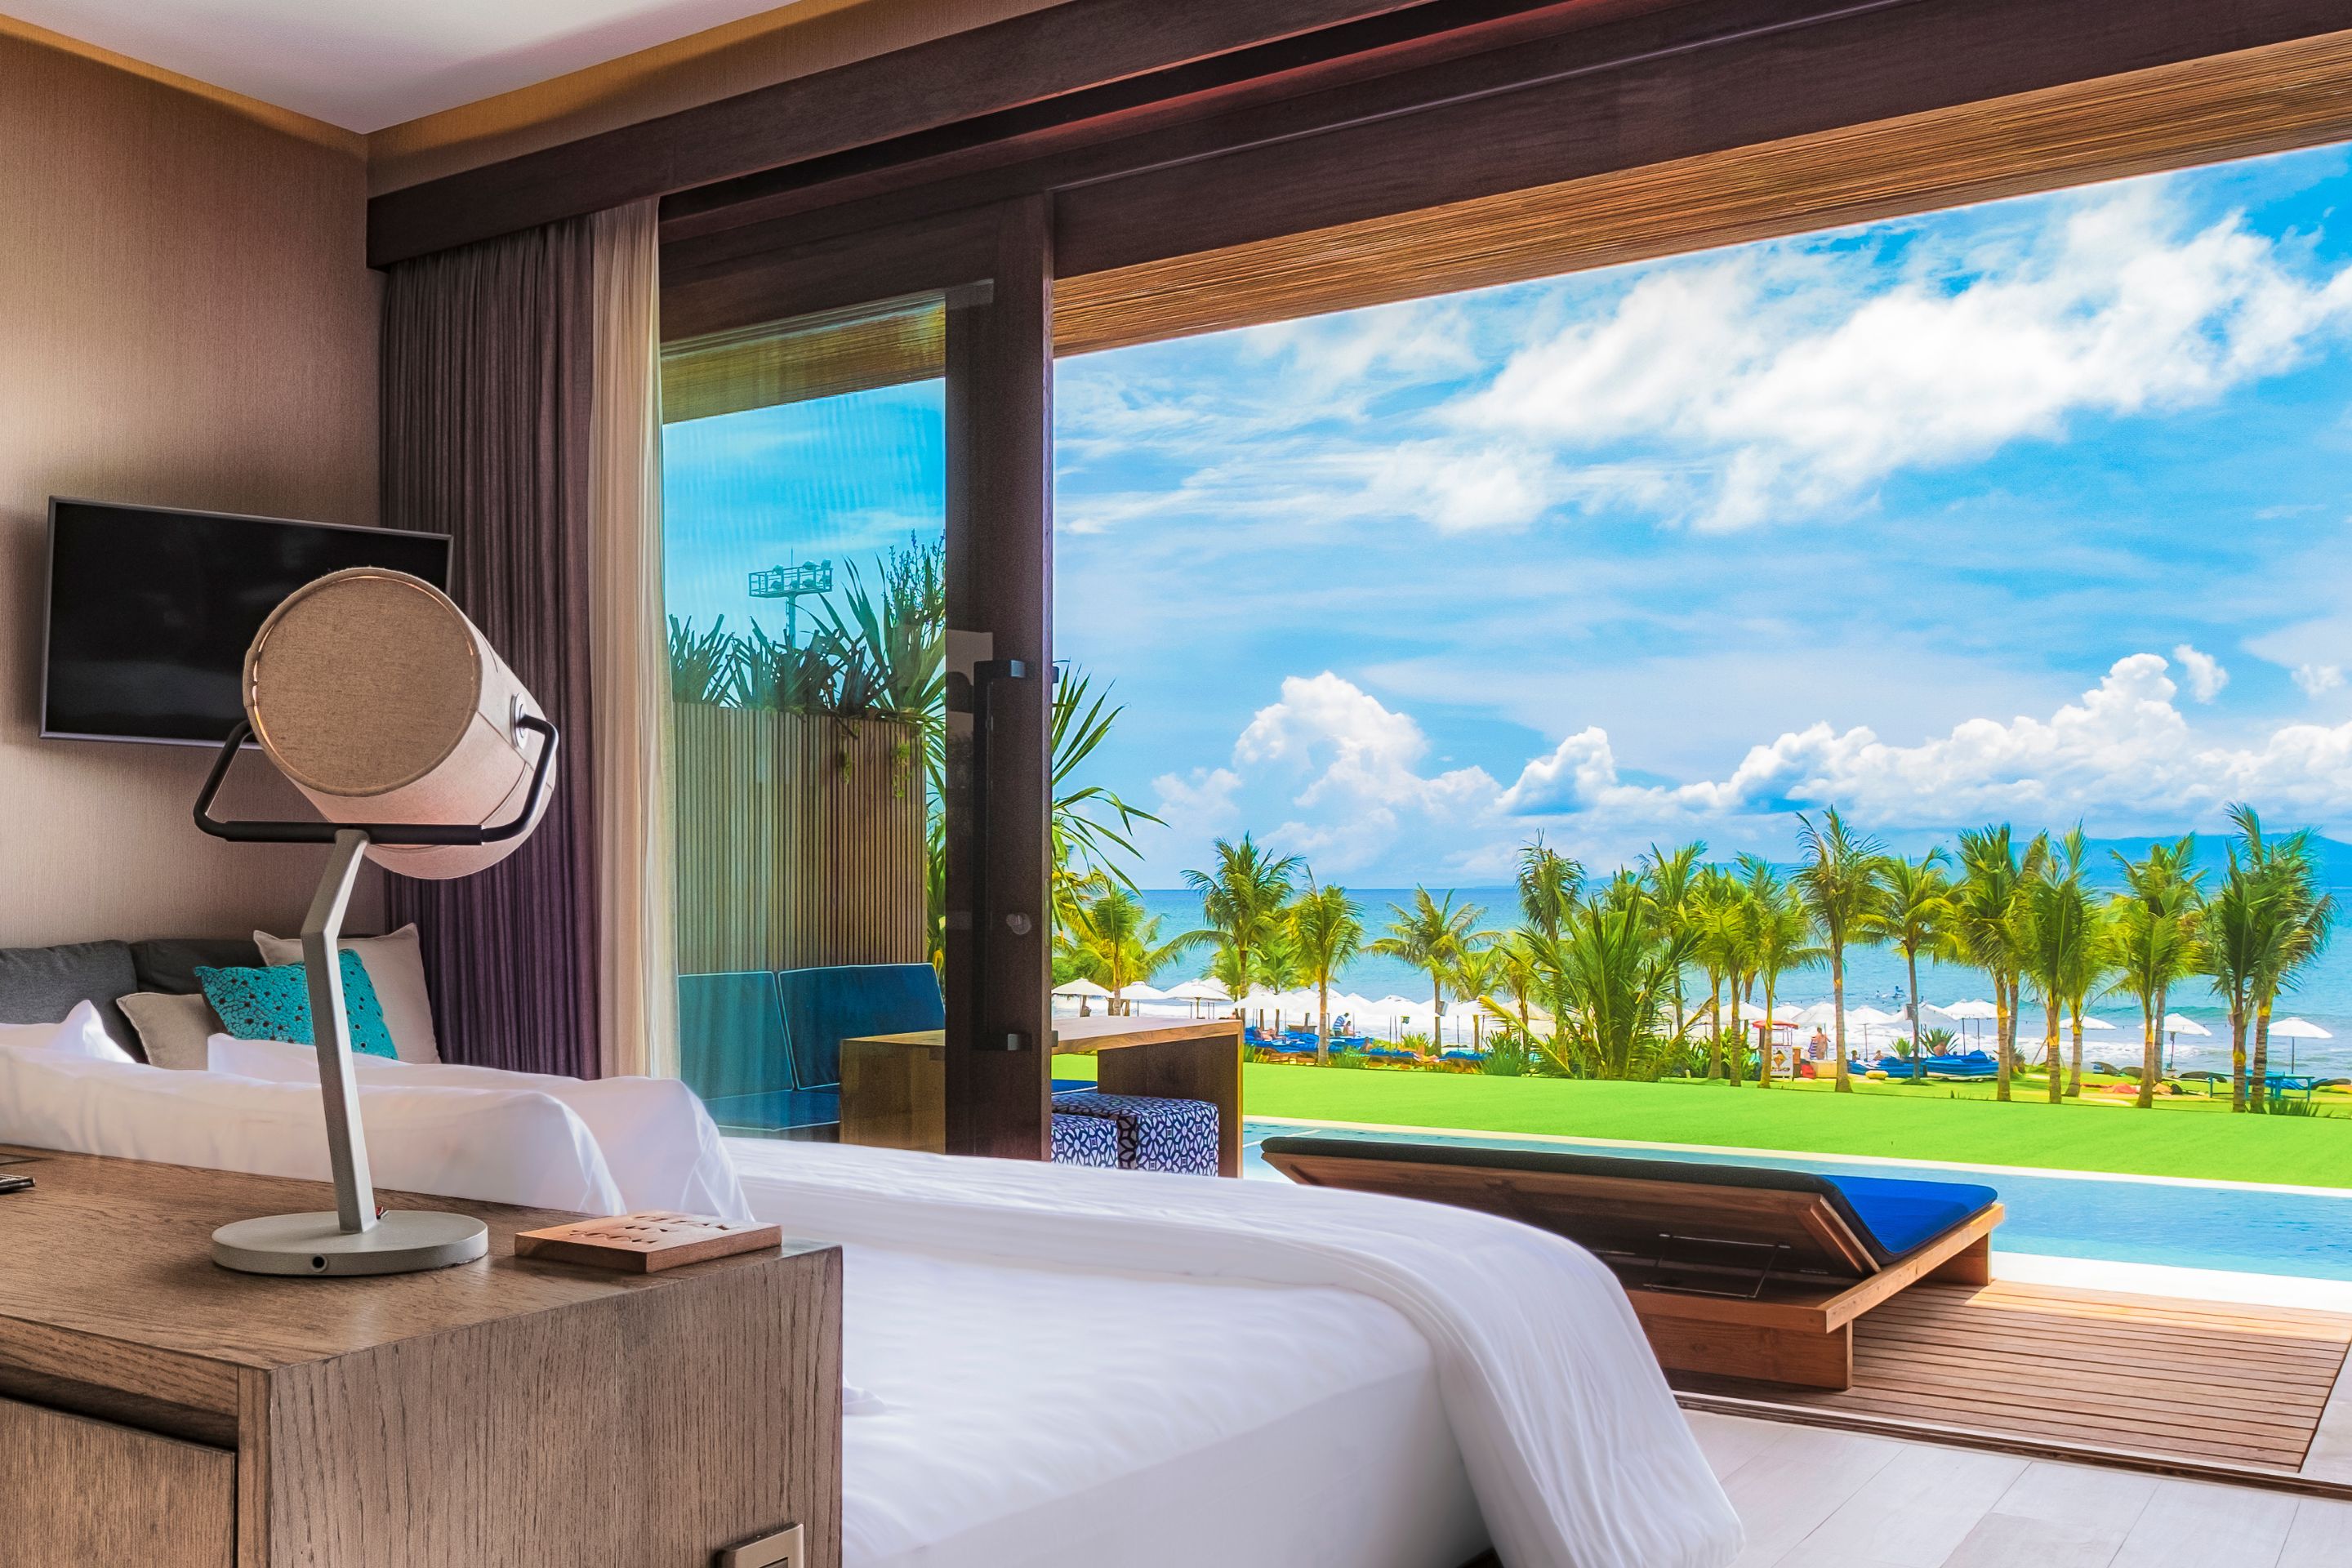 Beachfront pool suites overlooking Hotel Komune resort & Keramas surf break